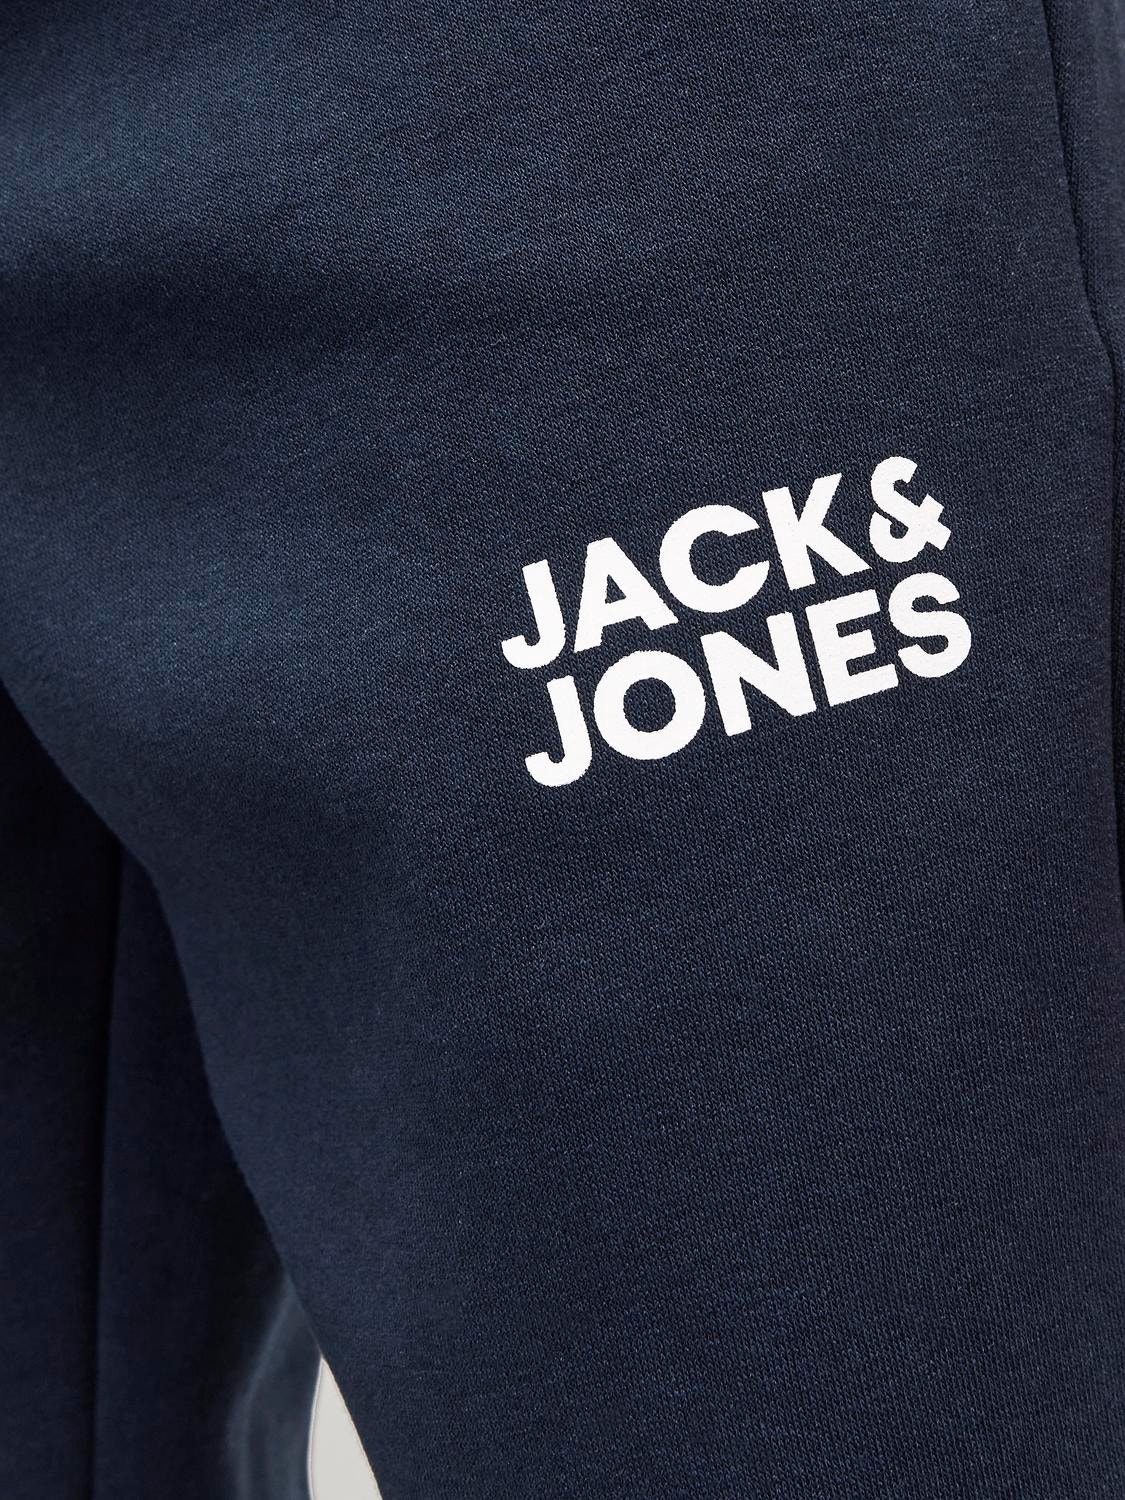 Jack & Jones Joggers Mini -Navy Blazer - 12257312